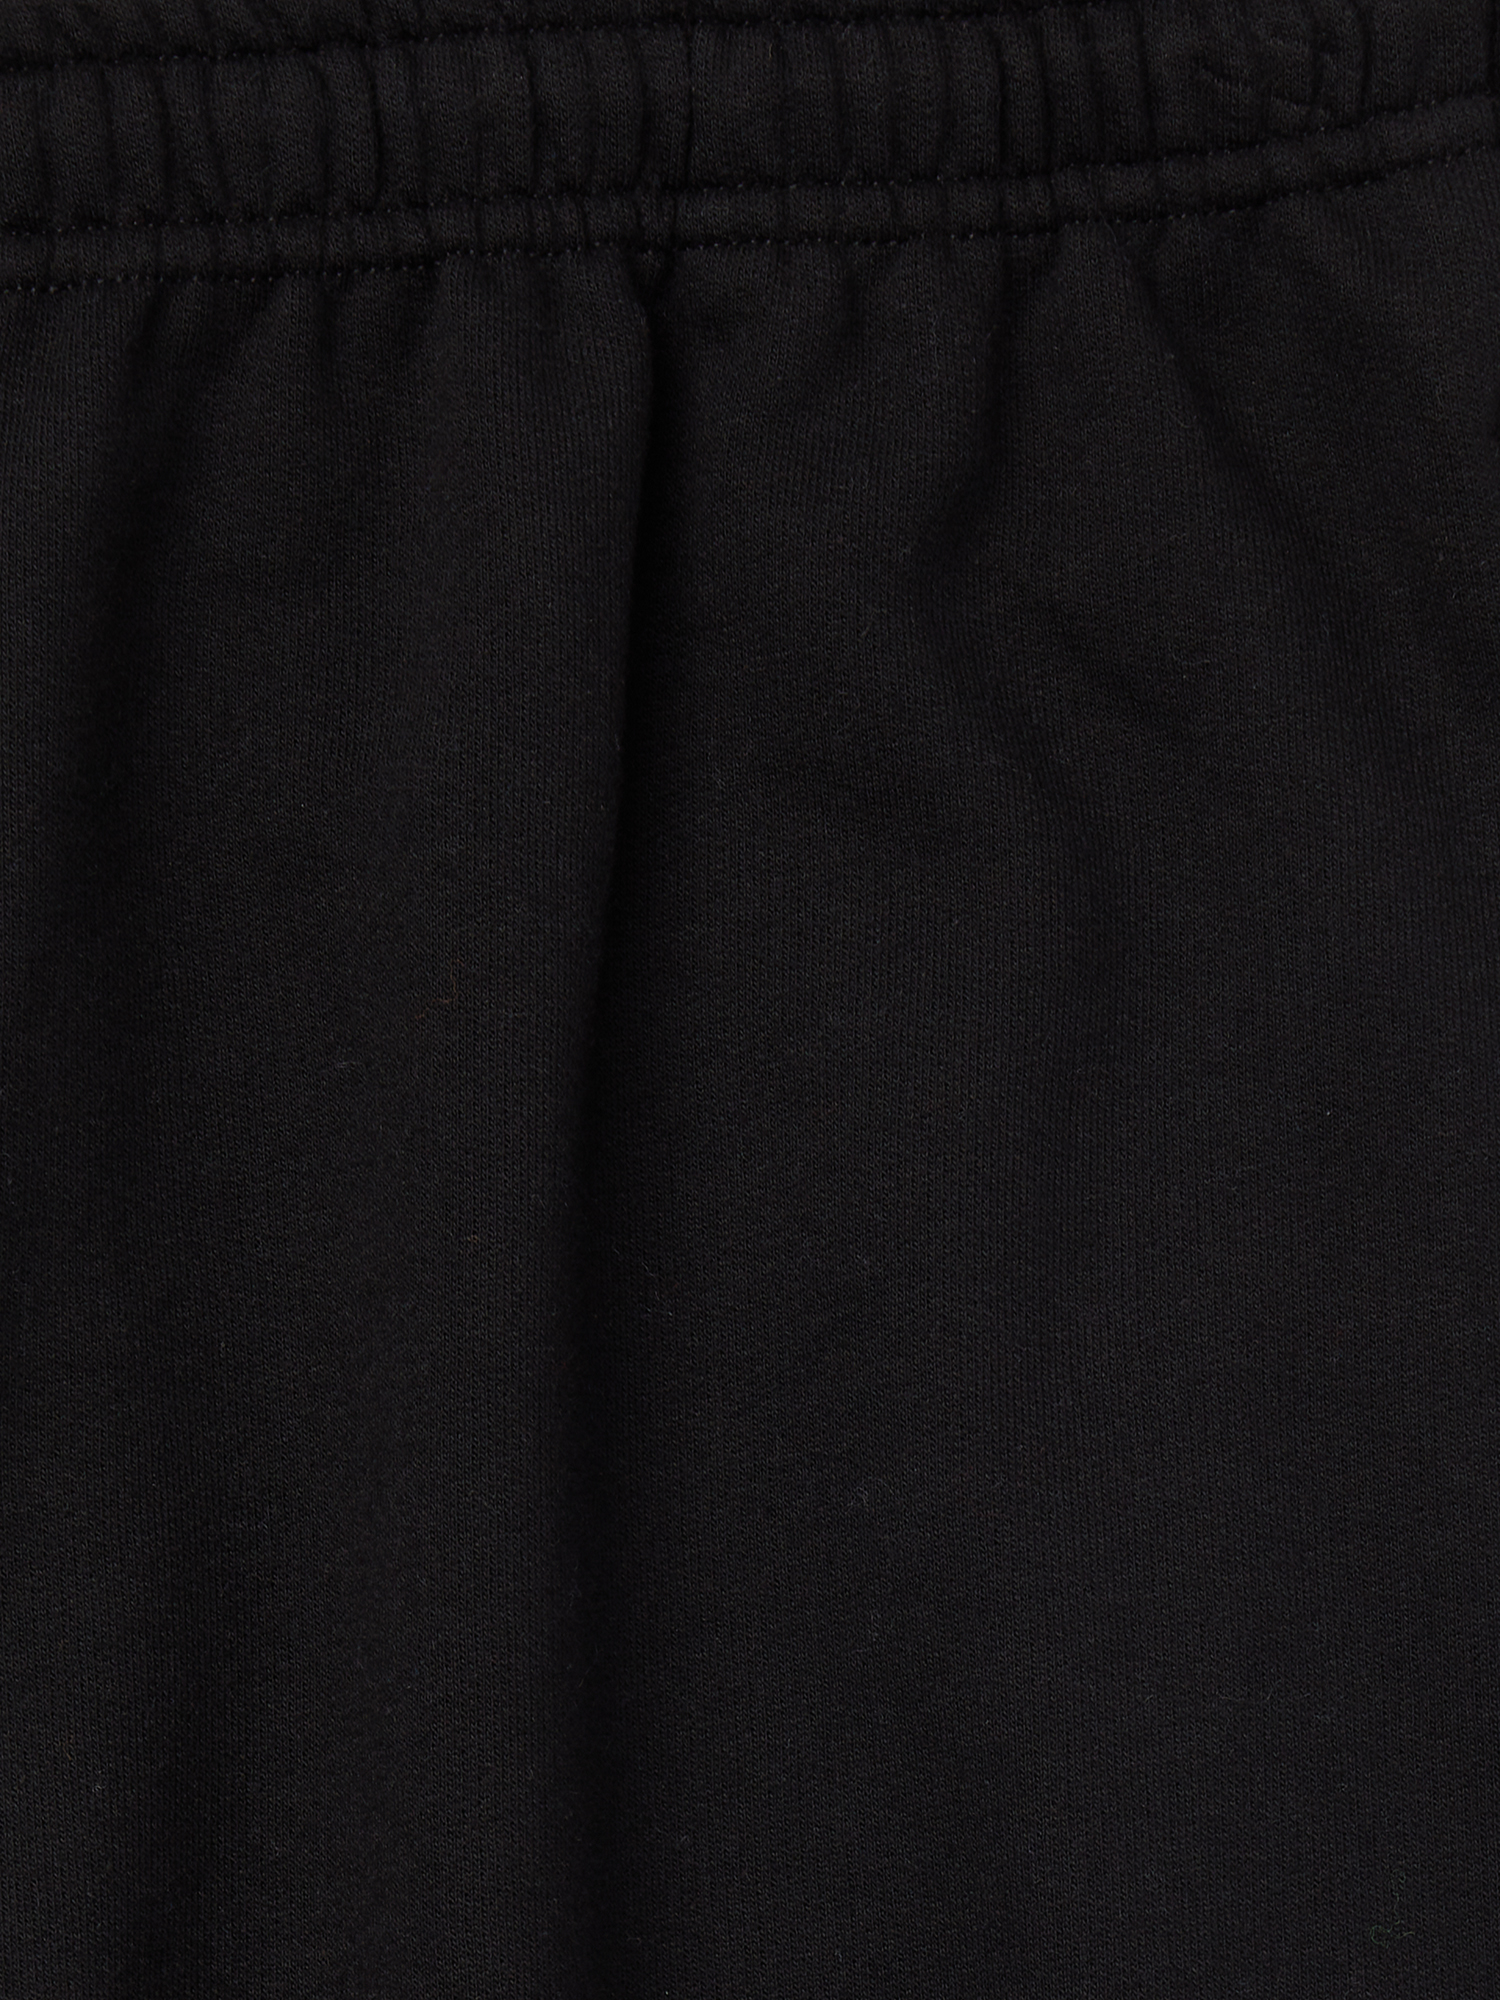 Athletic Works Men's Fleece Elastic Bottom Sweatpants - image 4 of 5